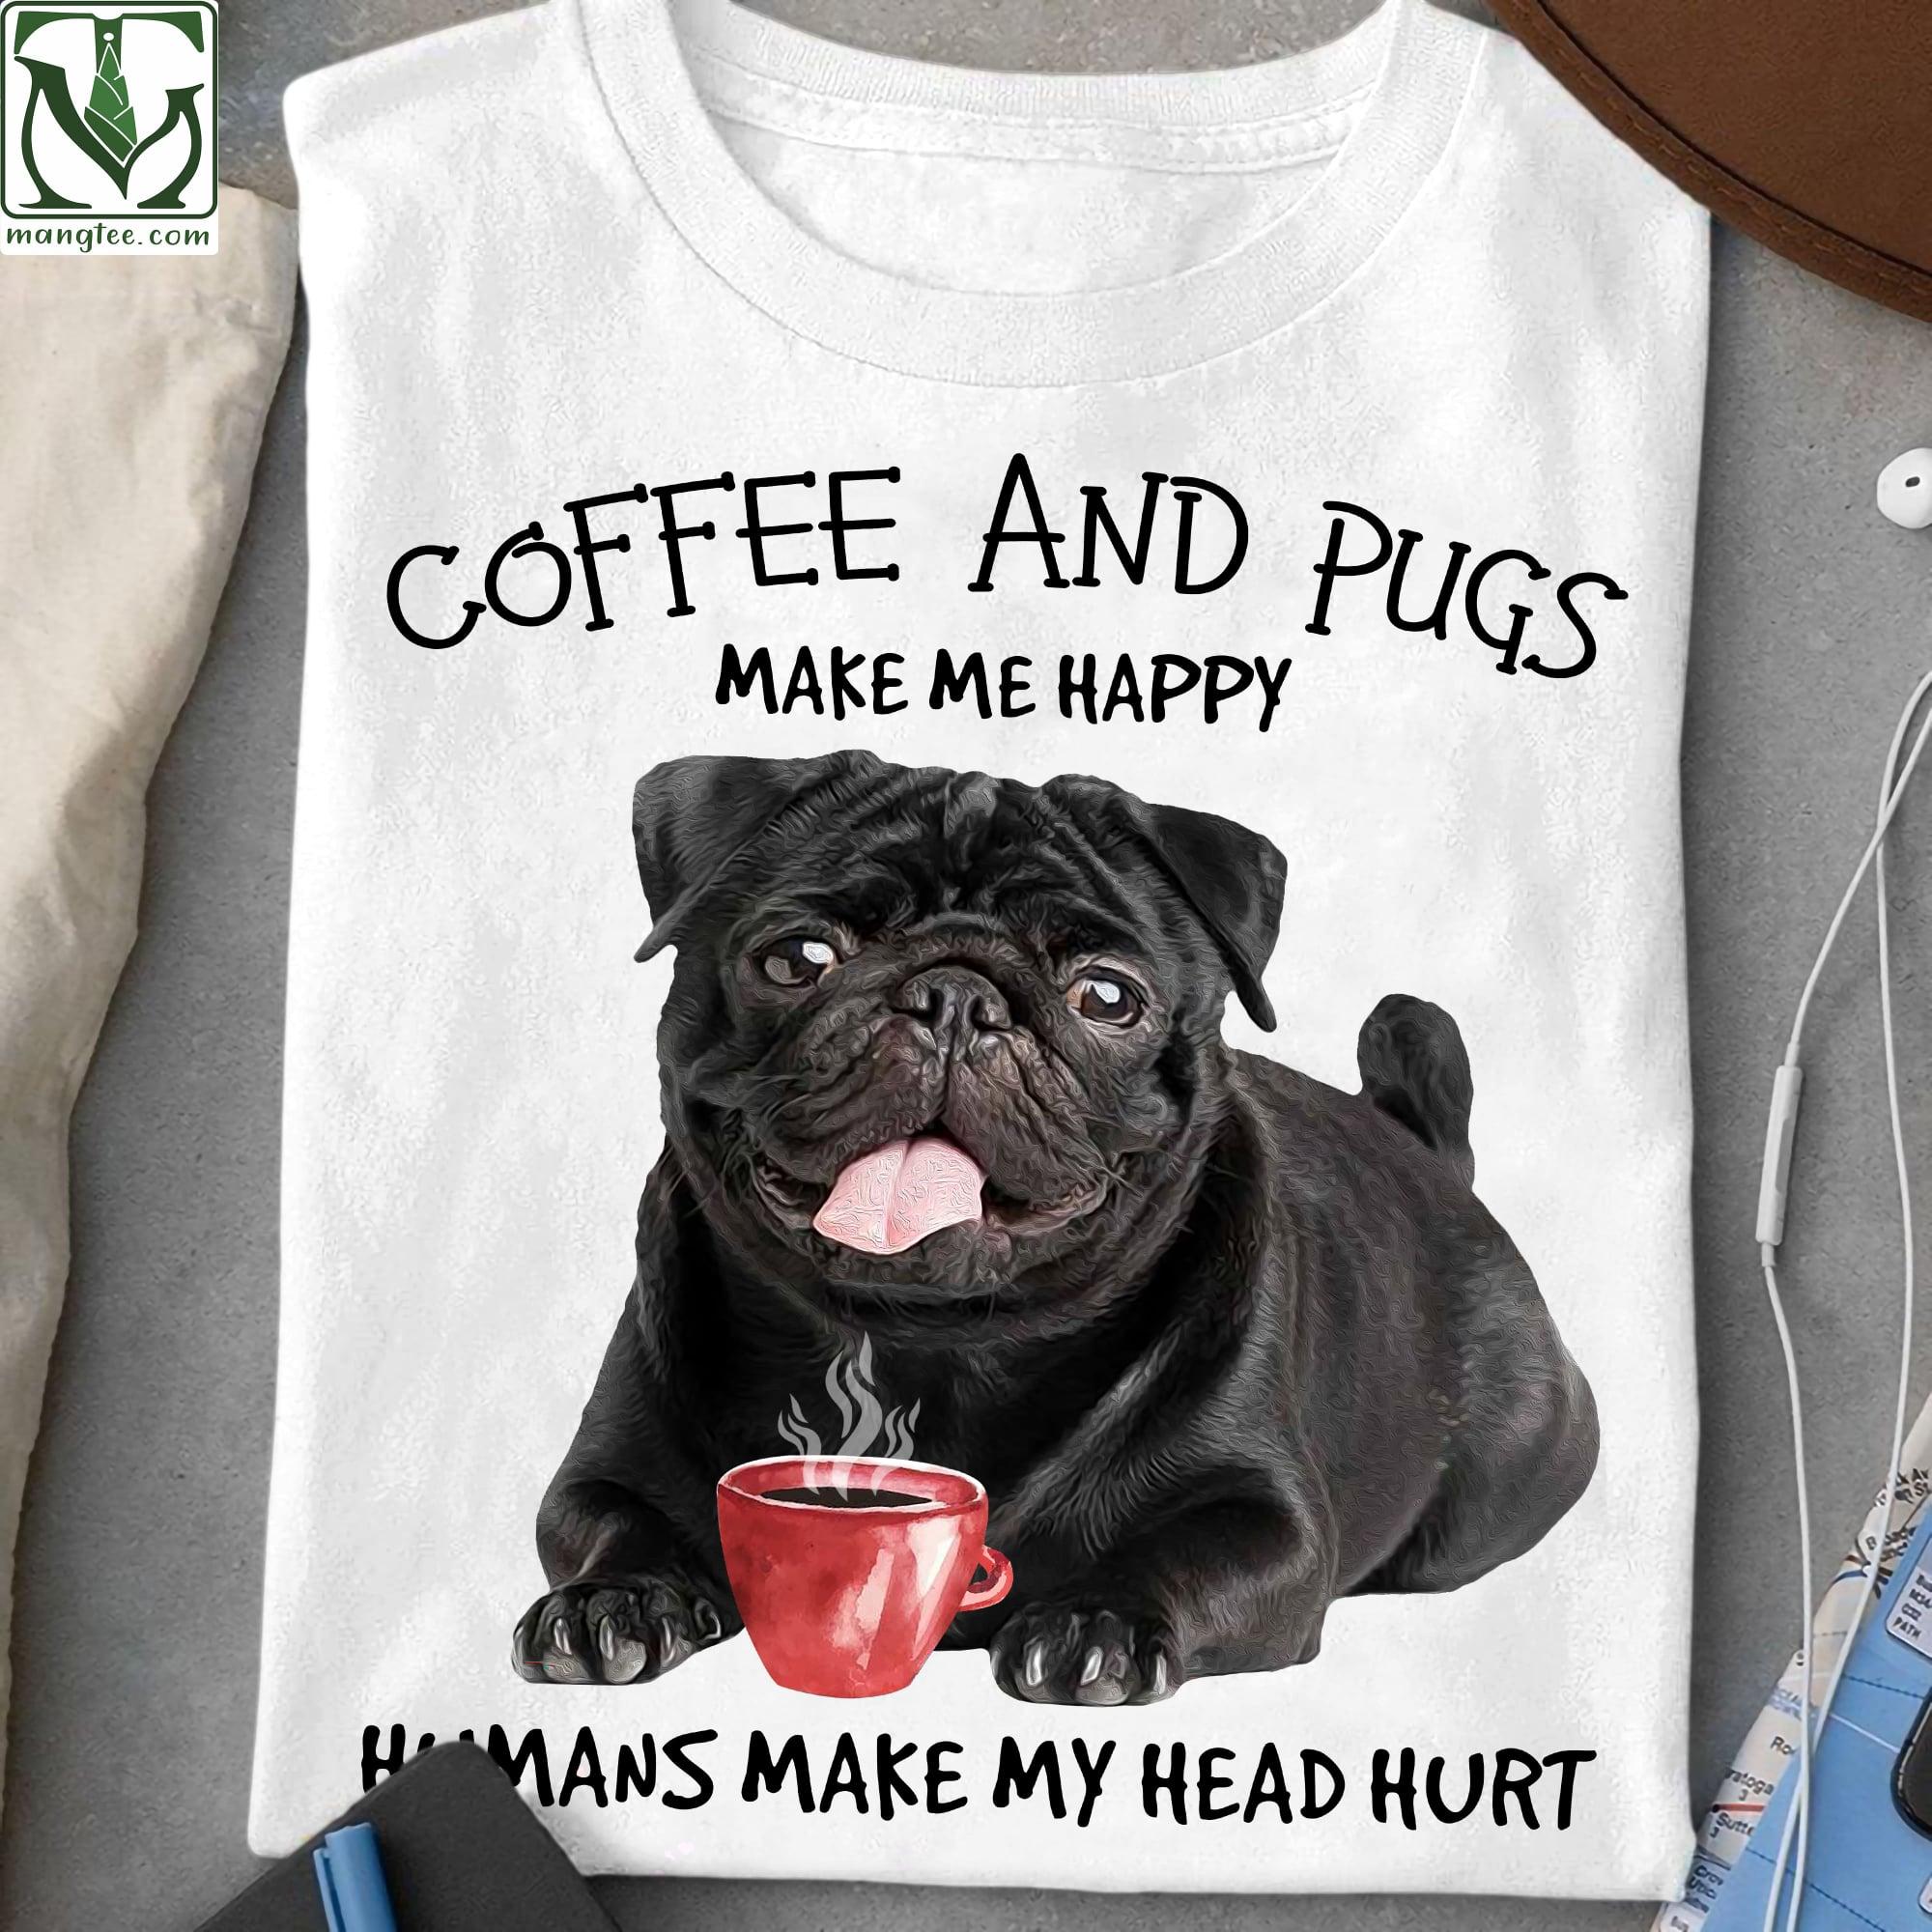 Coffee and pugs make me happy, humans make my head hurt - Black pug T-shirt